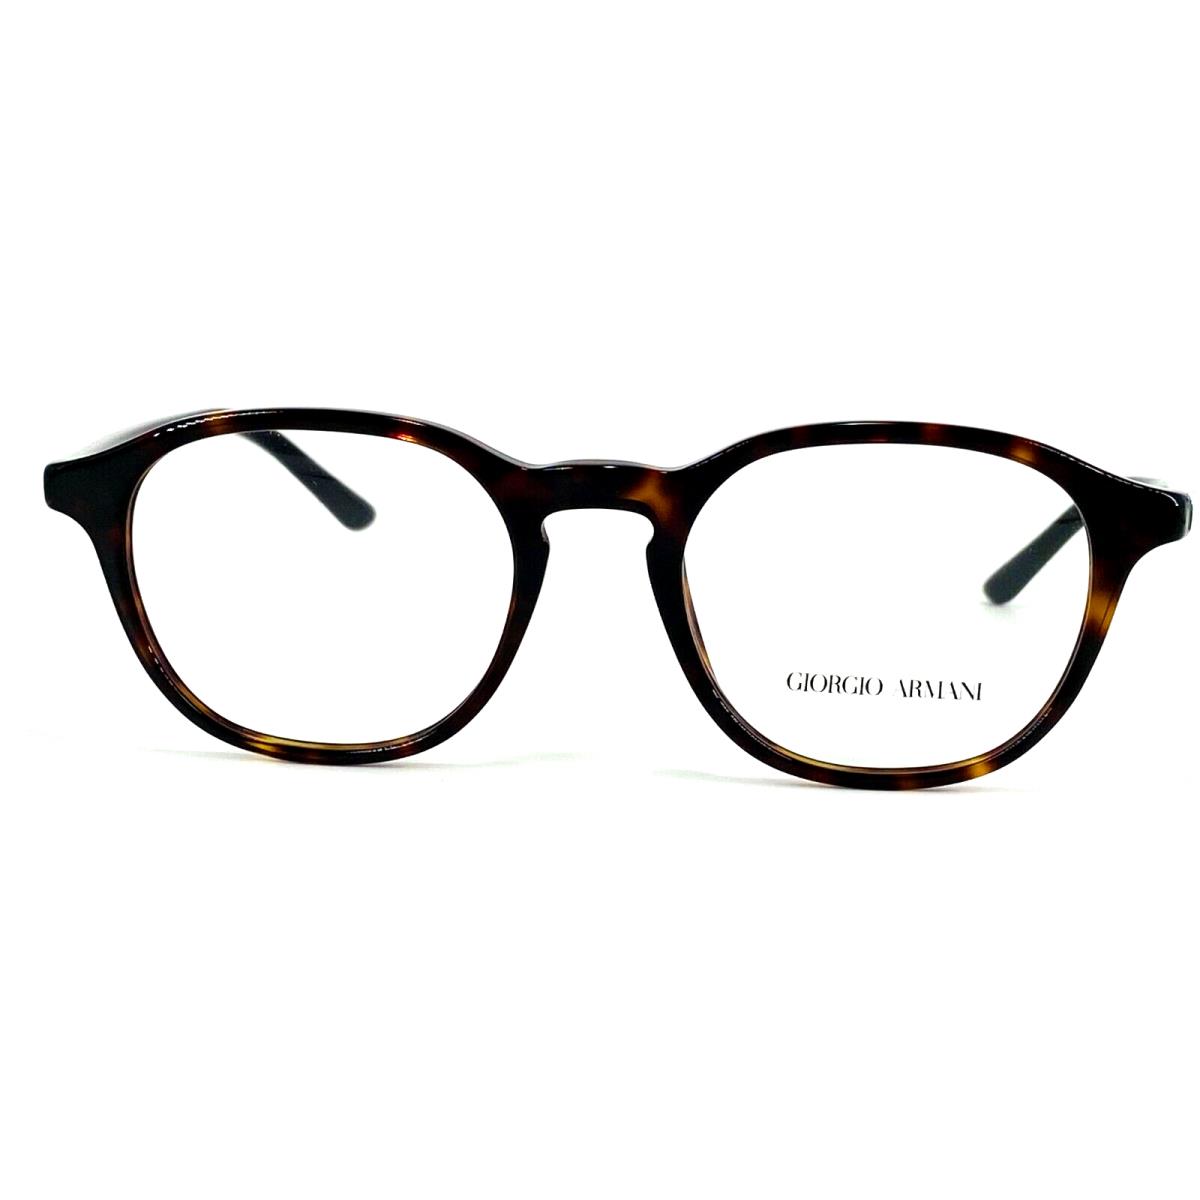 Giorgio Armani eyeglasses  - 5026 Dark Havana , Brown Frame 0